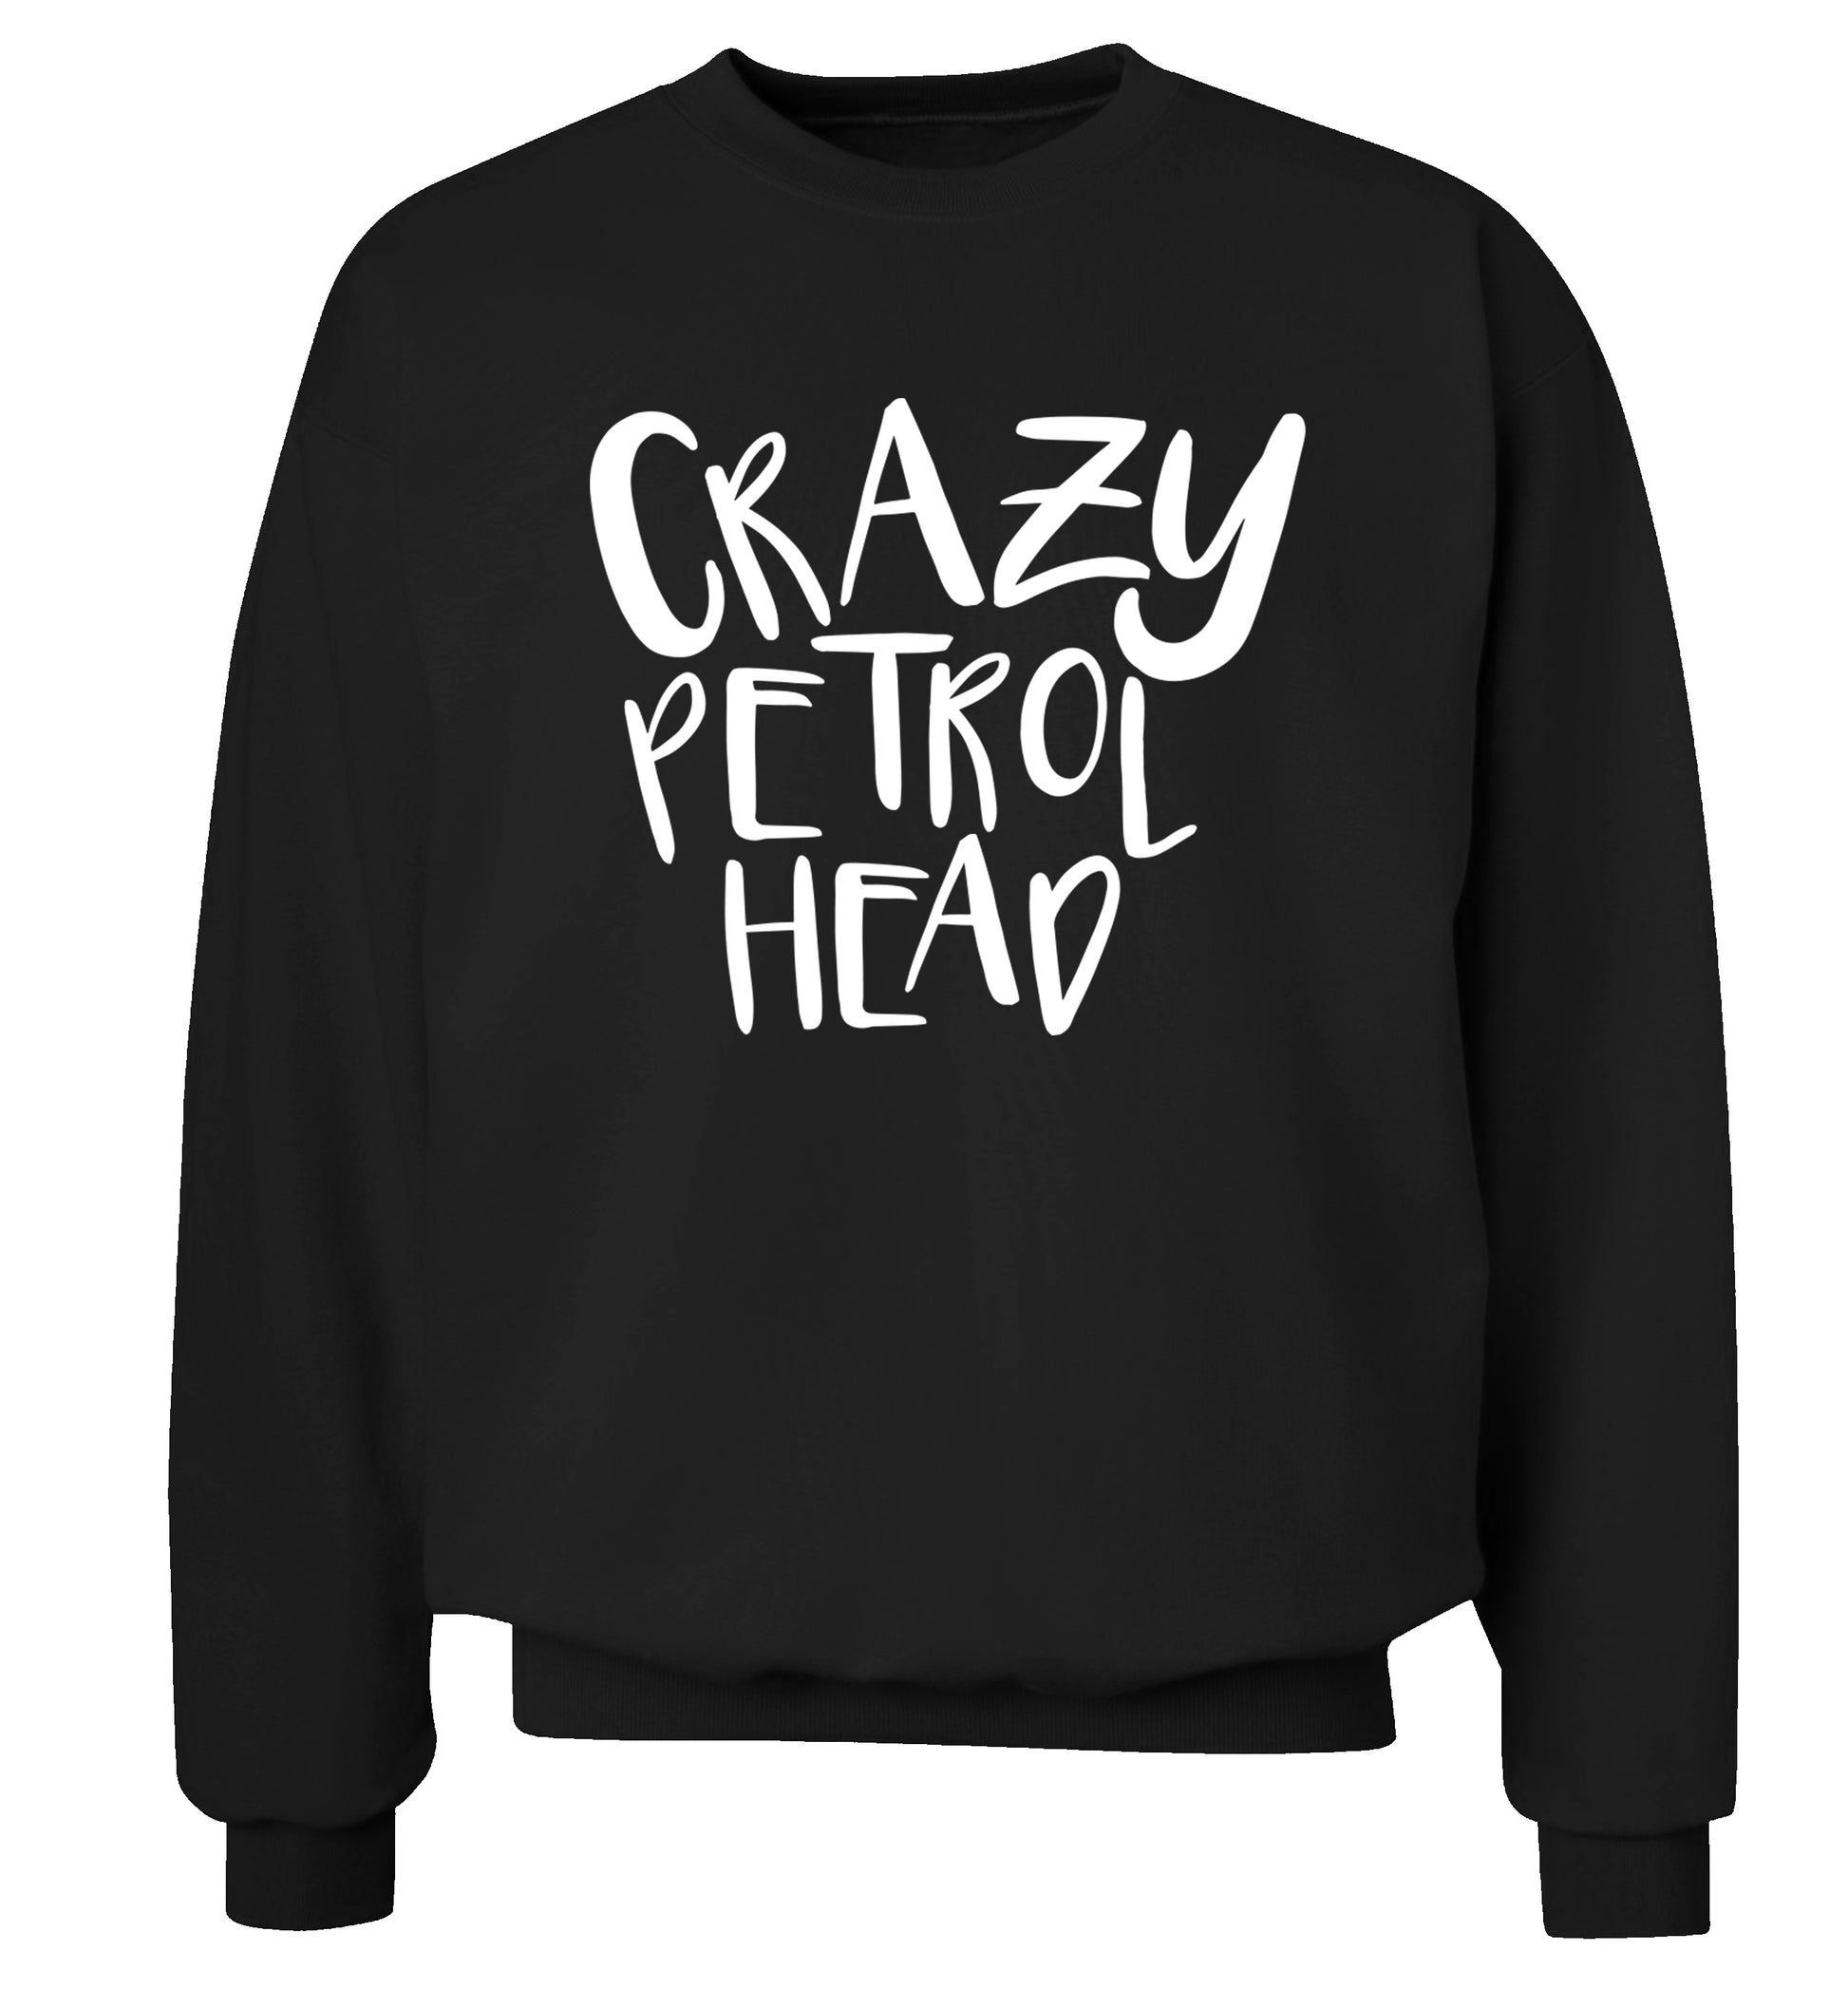 Crazy petrol head Adult's unisex black Sweater 2XL